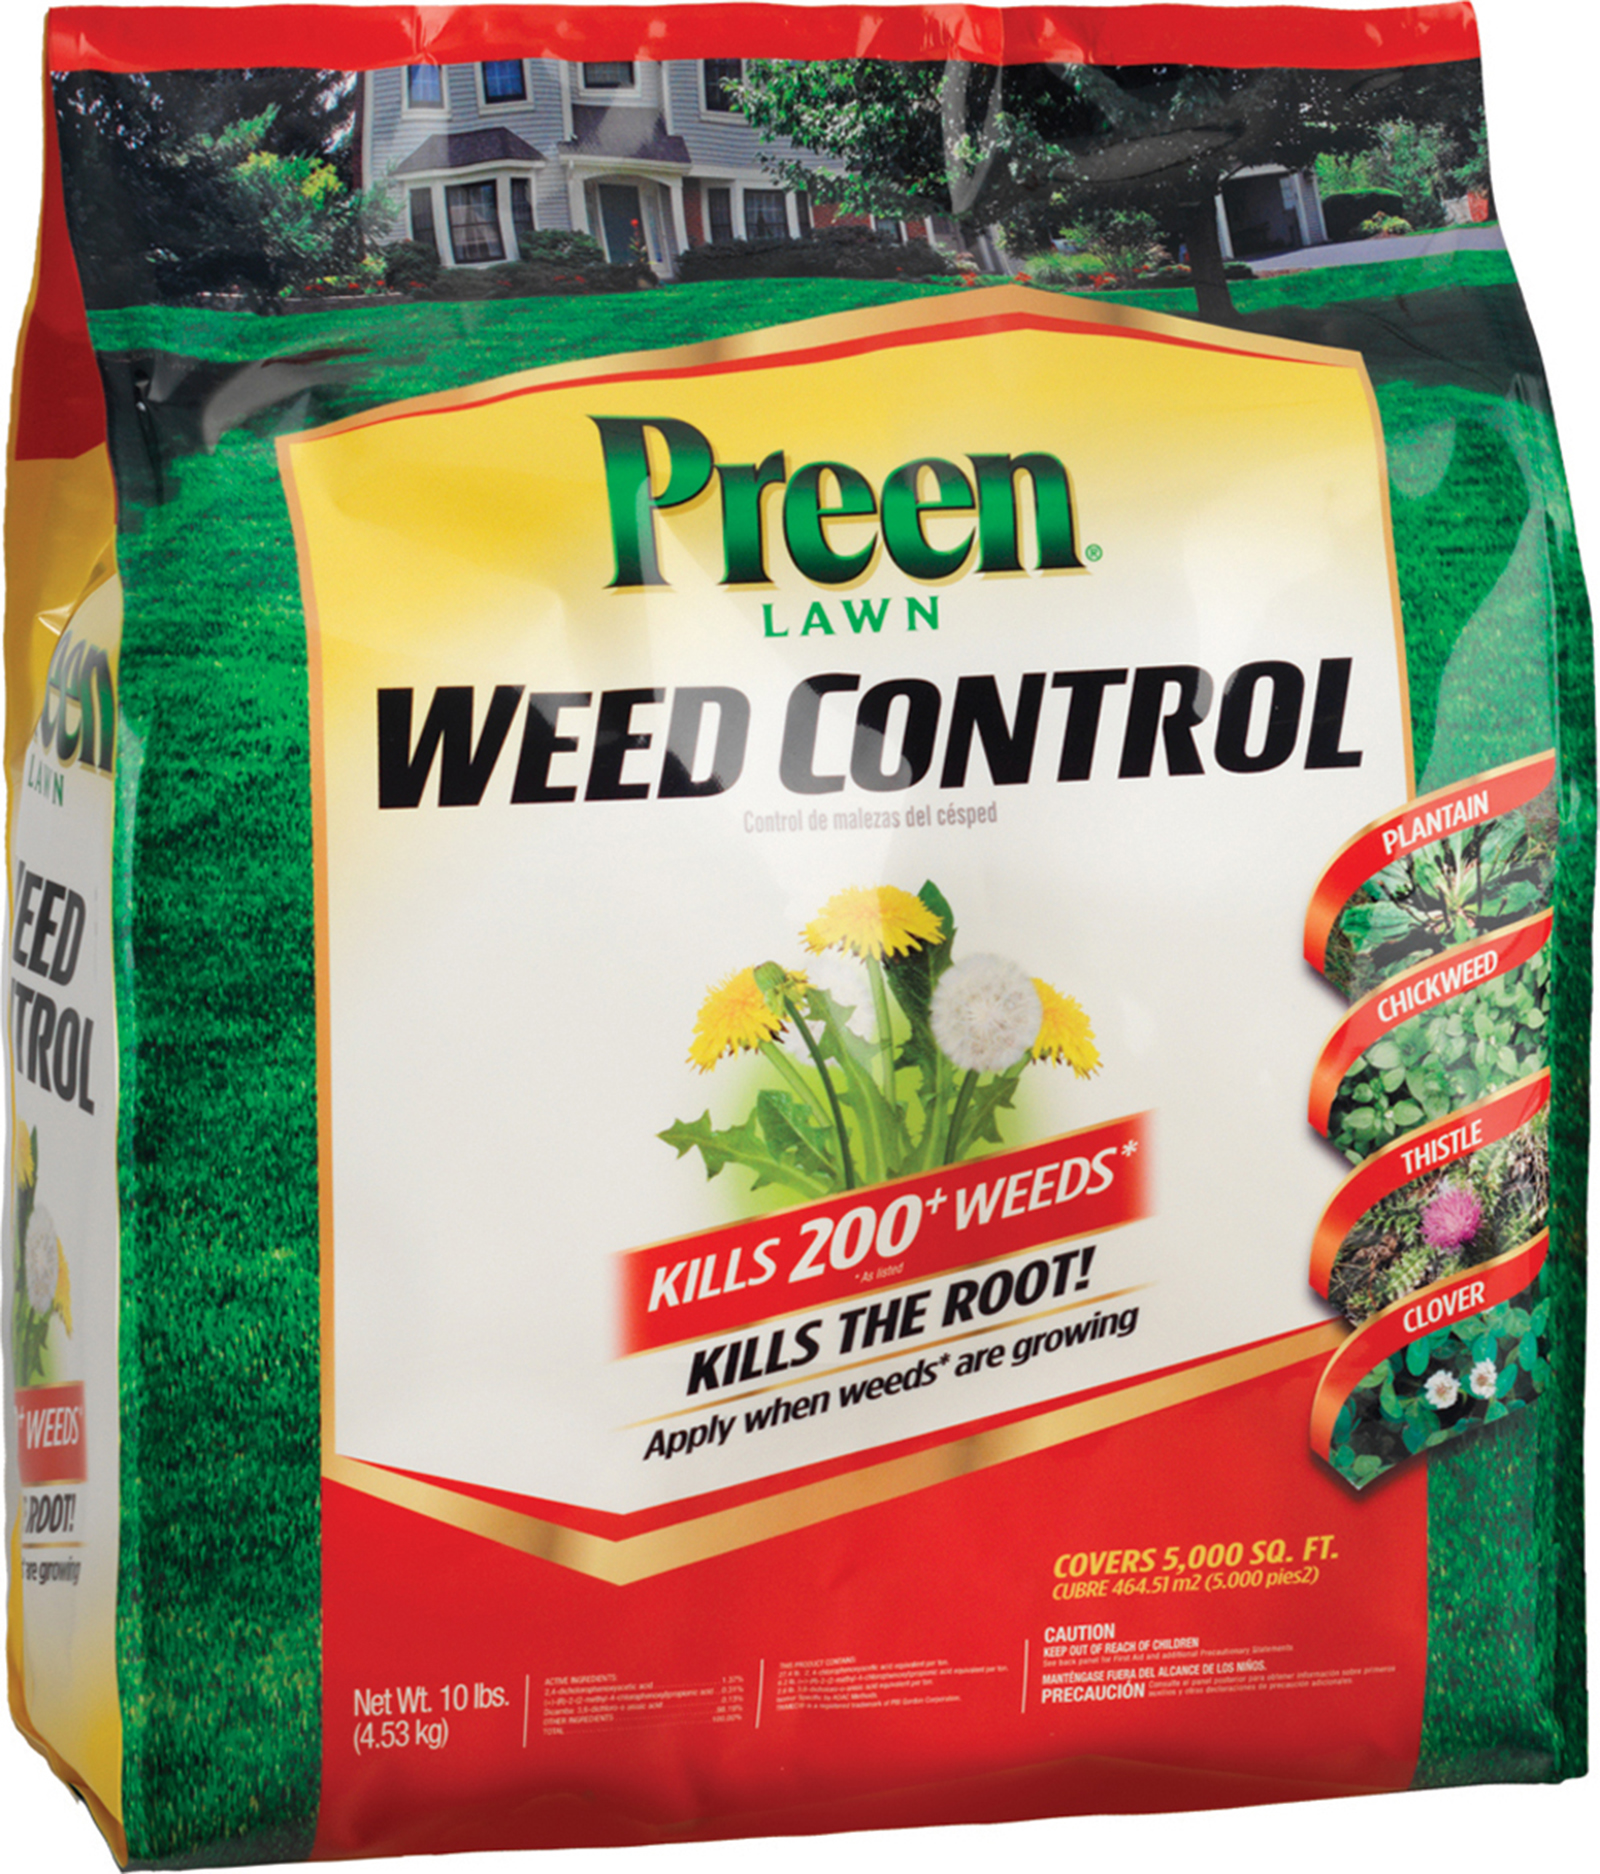 Preen G81 2464015 10 lb. Lawn Weed Control yellow